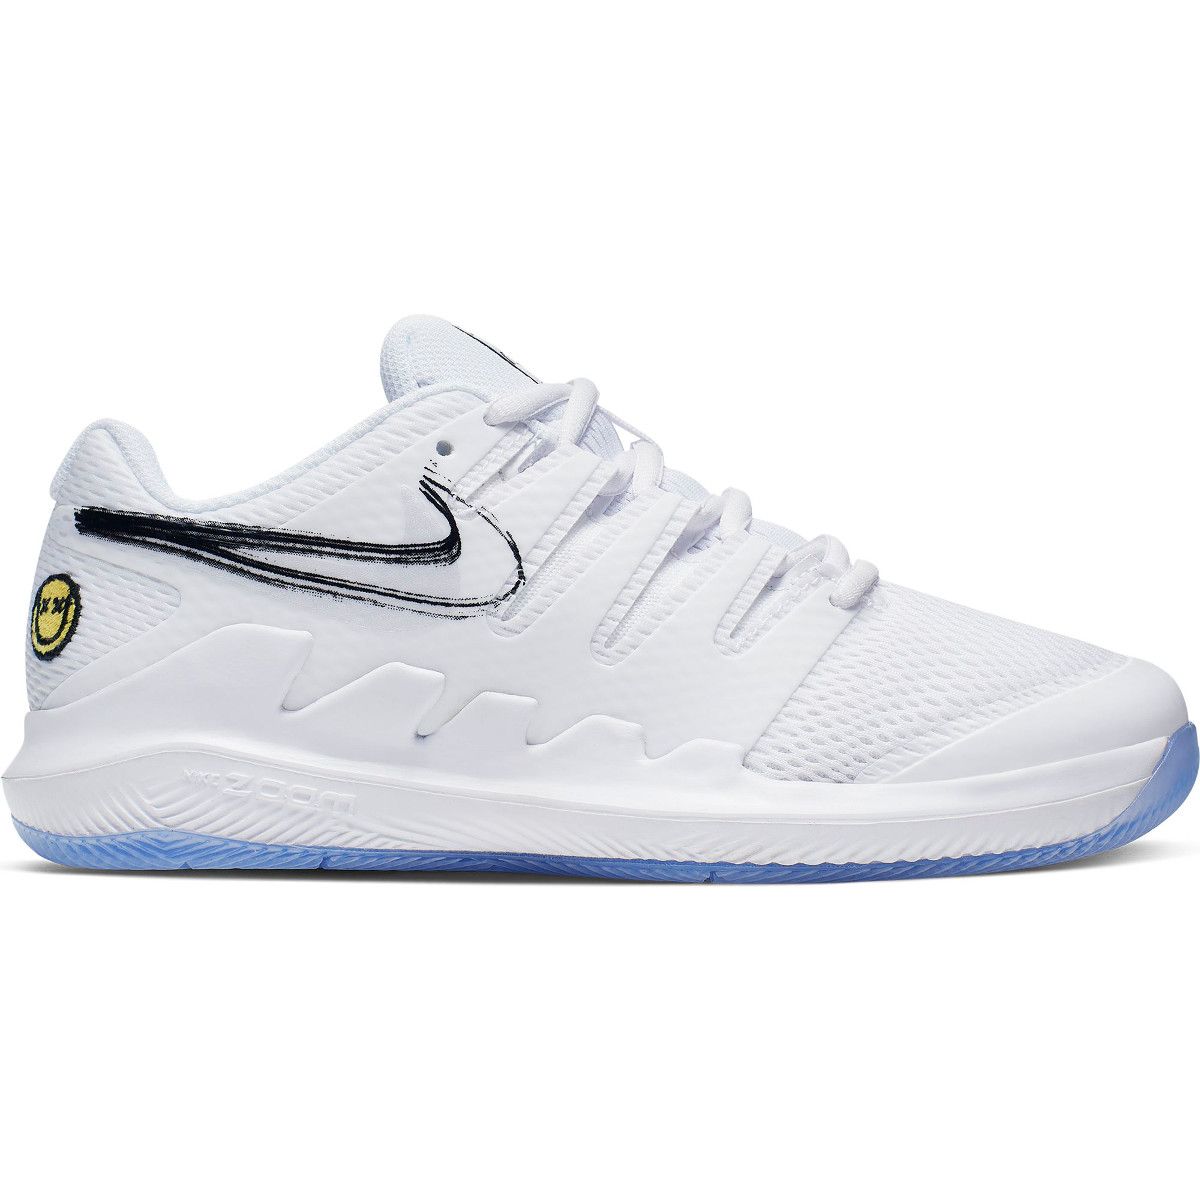 NikeCourt Vapor X Junior Tennis Shoes AR8851-100